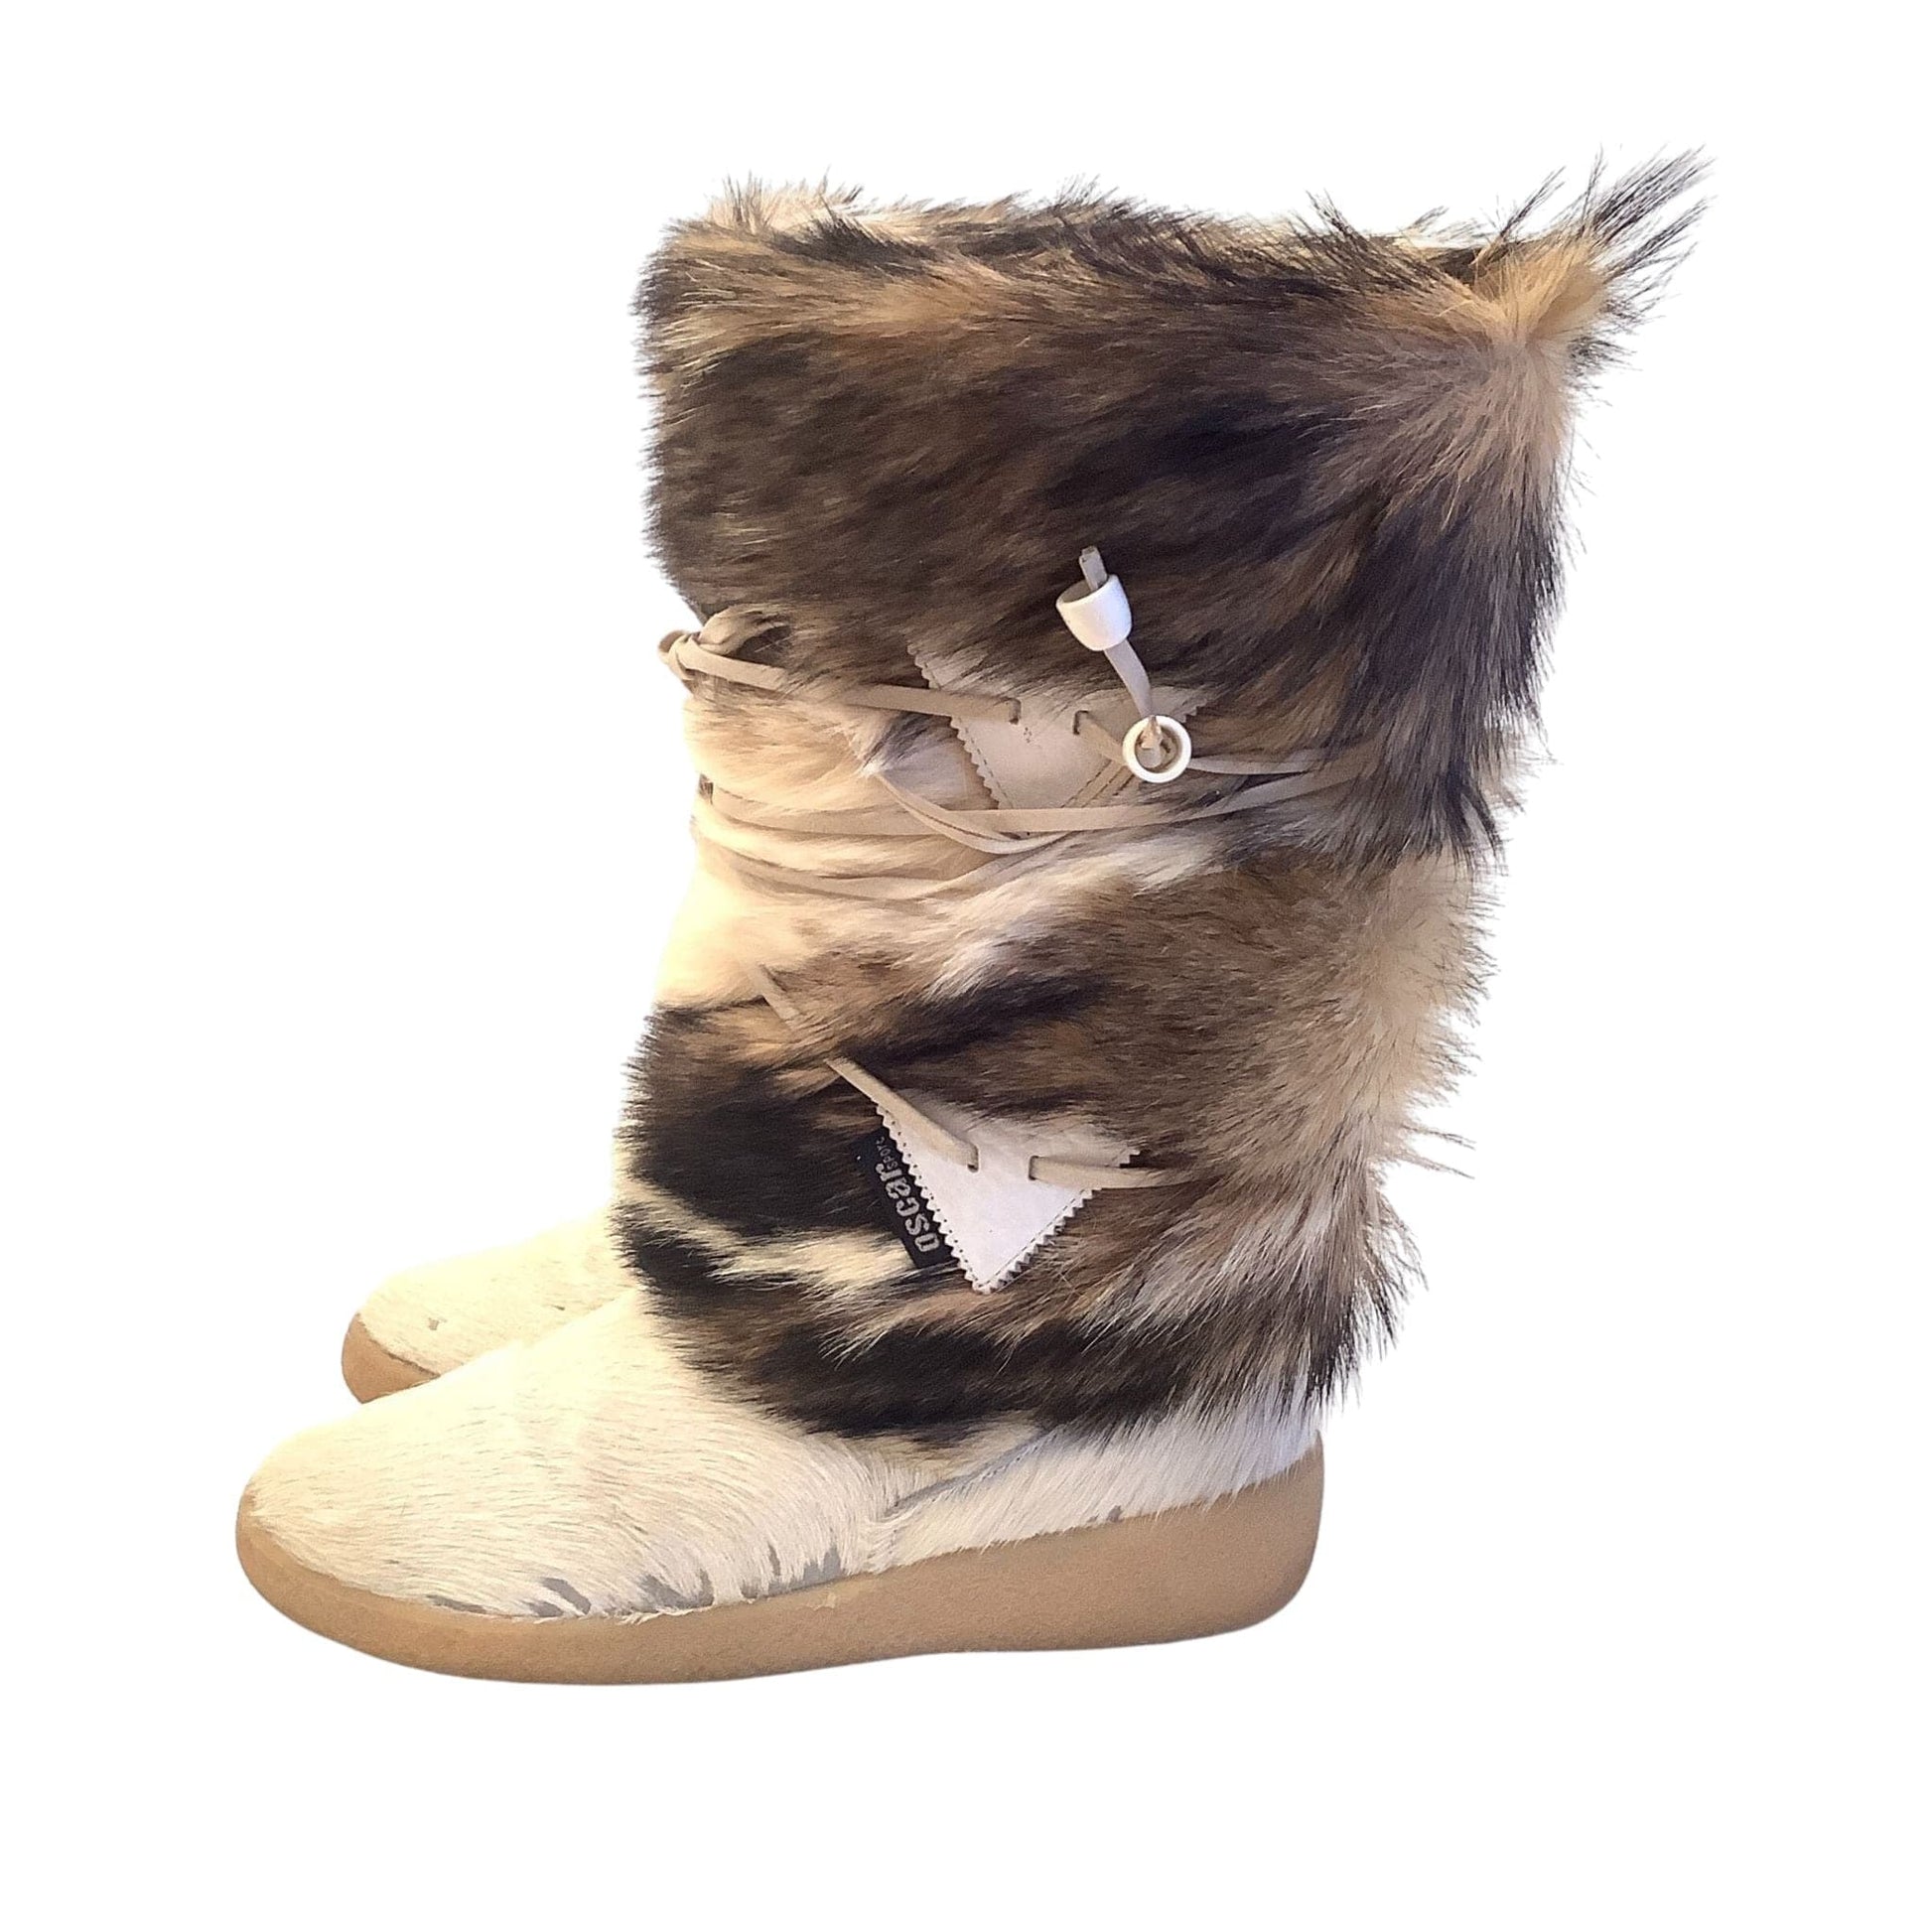 Vintage Fur Snow Boots Multi / Mixed / Vintage 1980s